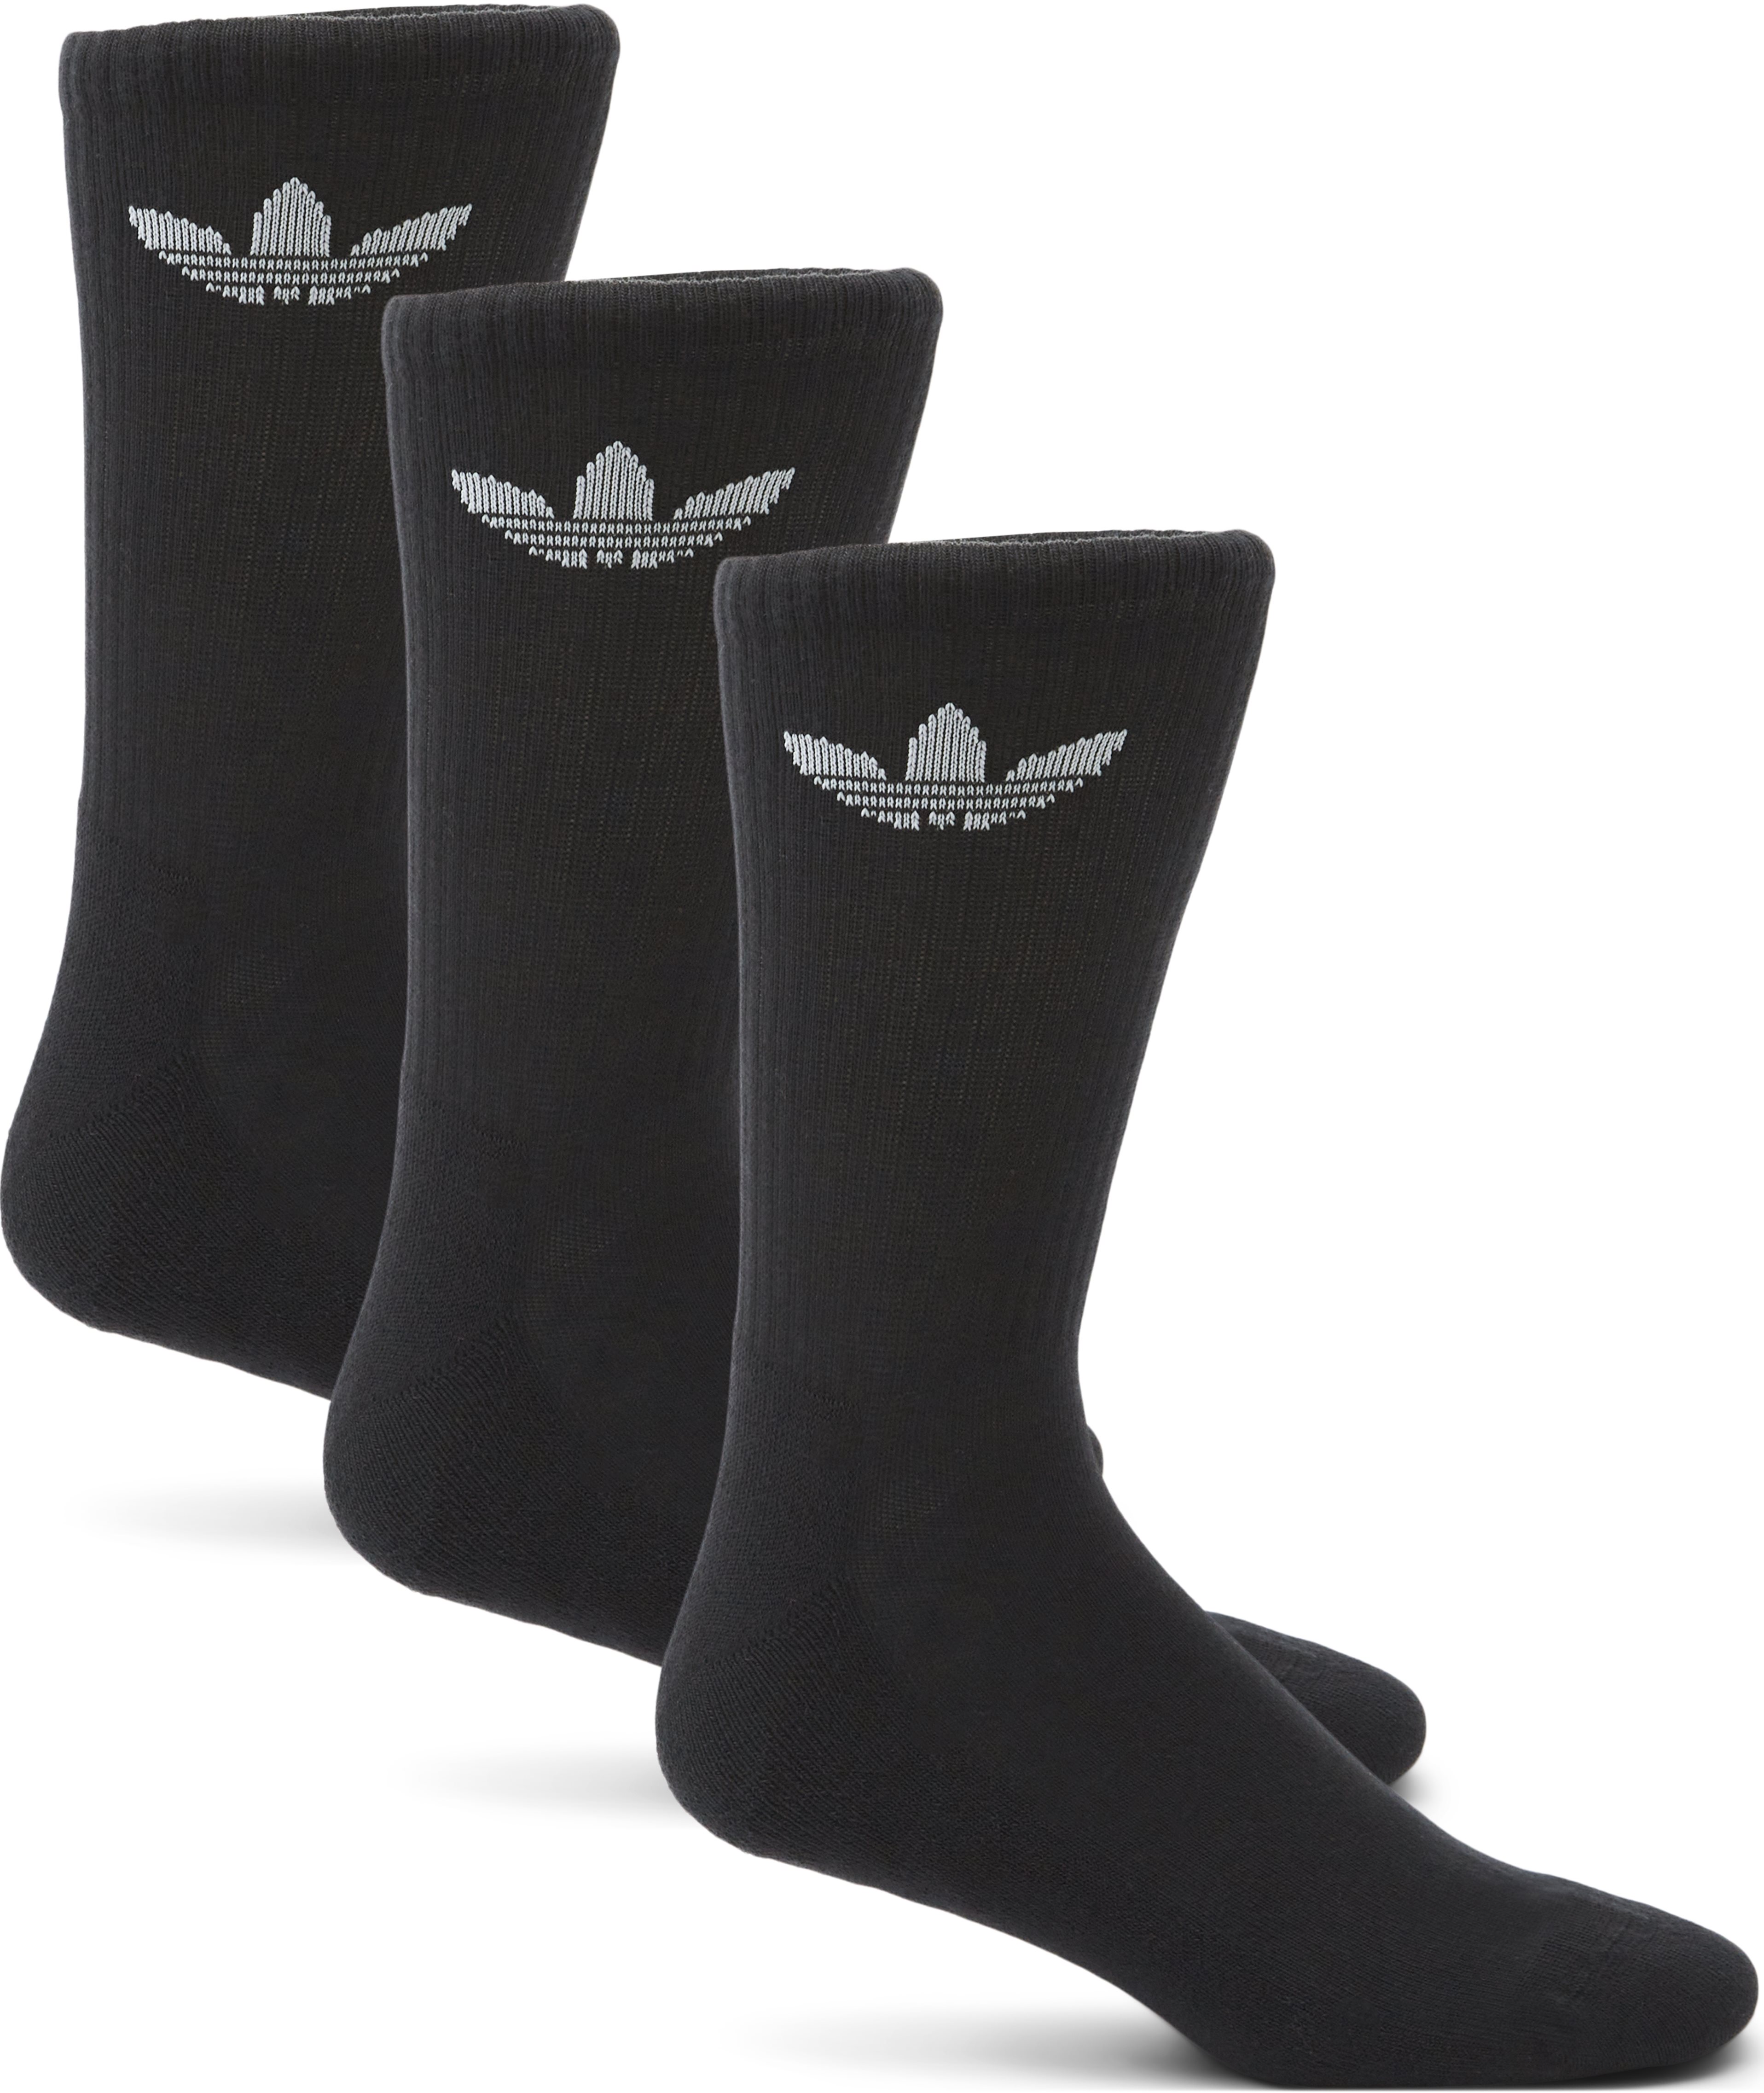 Adidas Originals Socks CUSTRE CRW SCK HC9547 Black